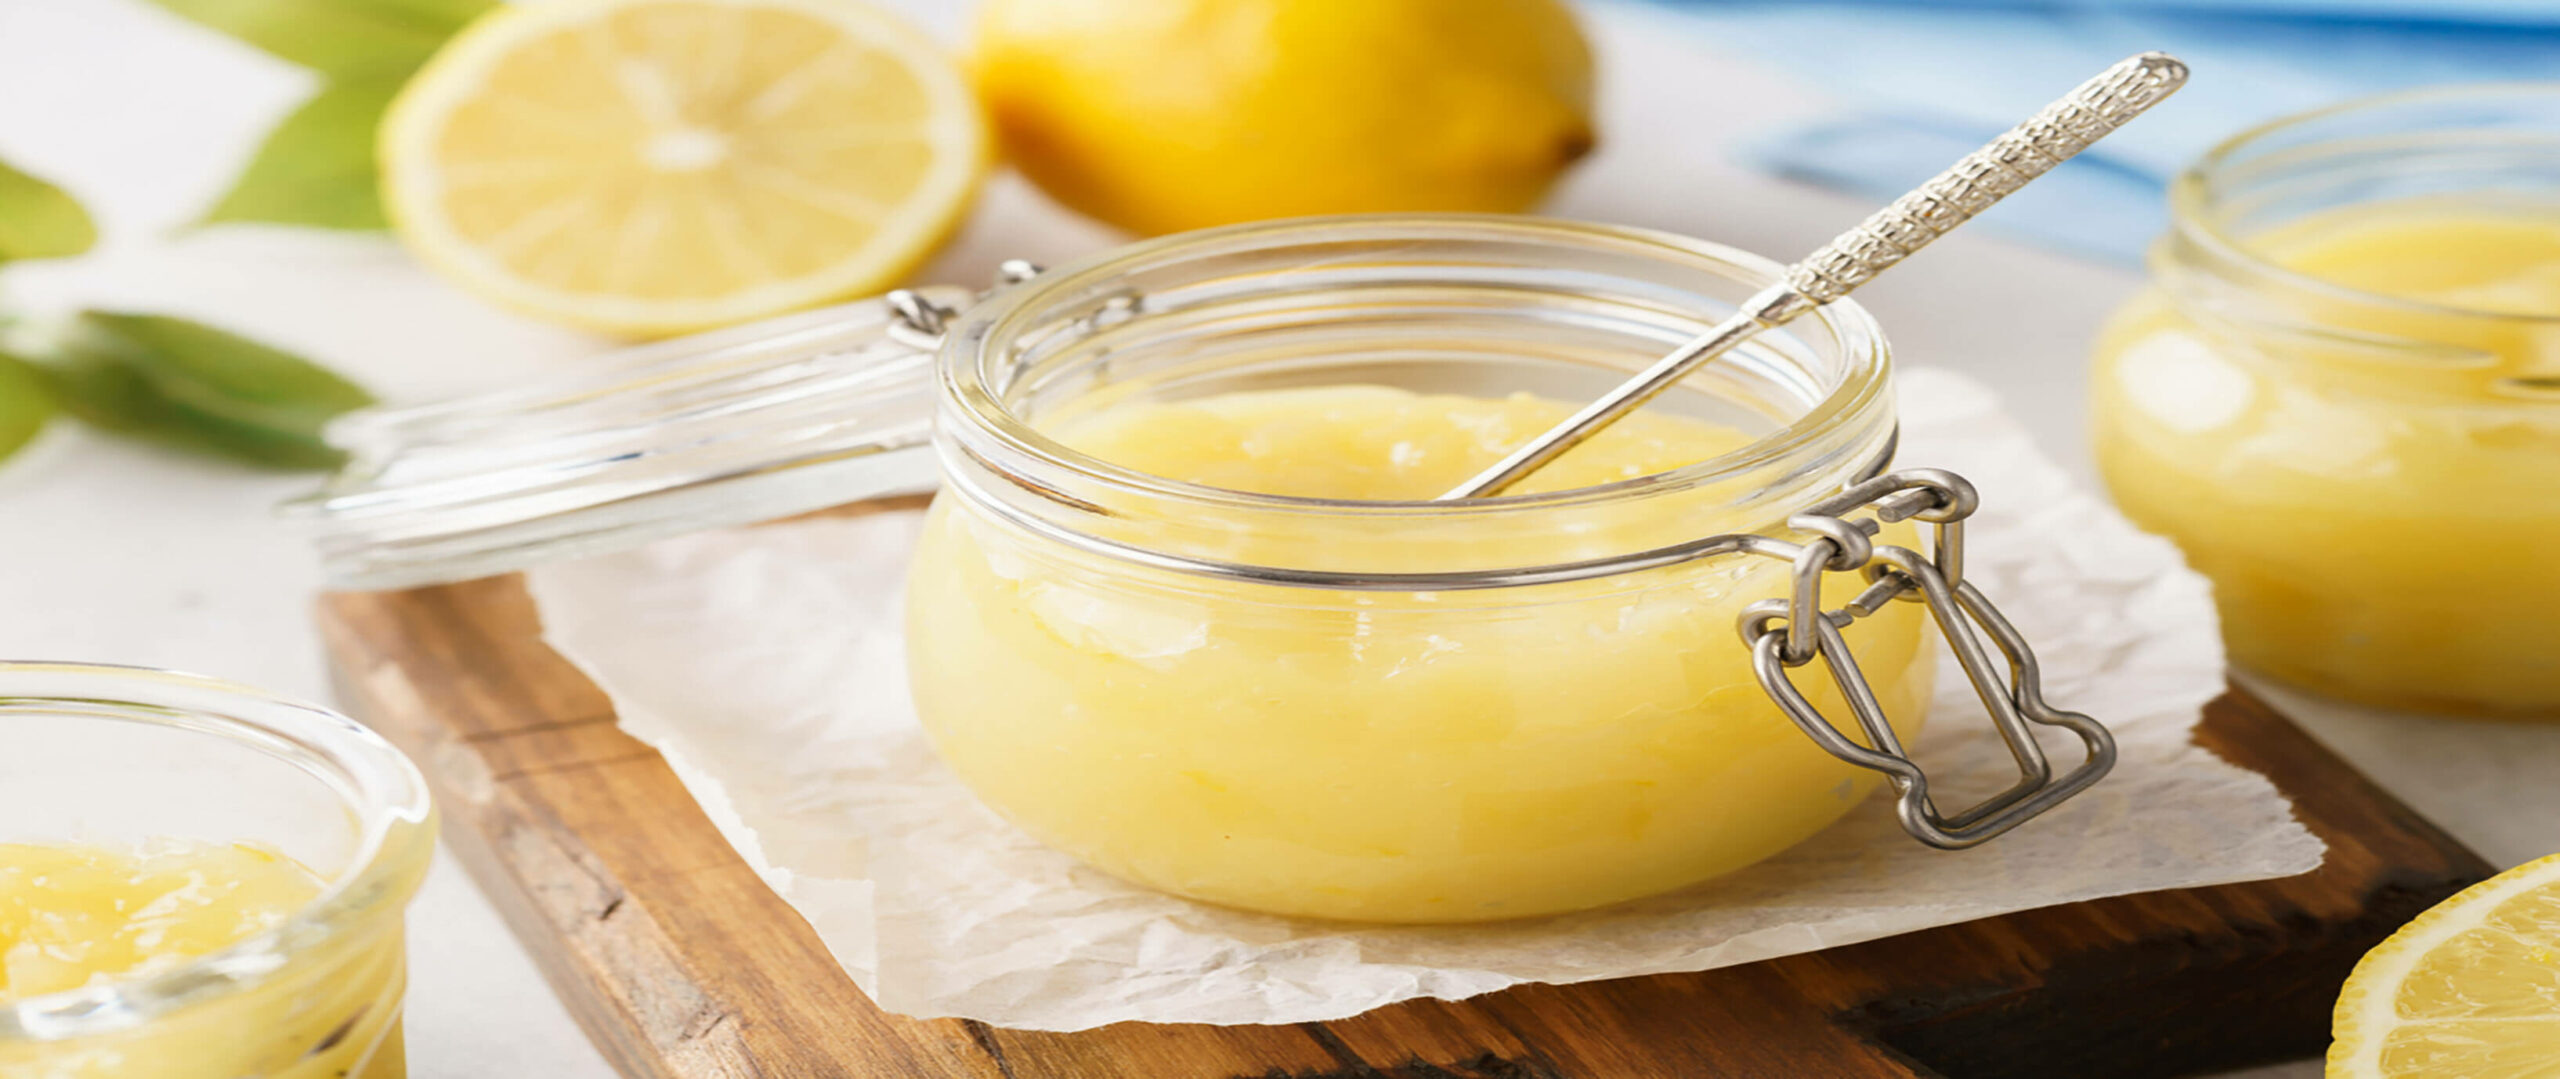 چگونه پودینگ لیمویی درست کنم؟